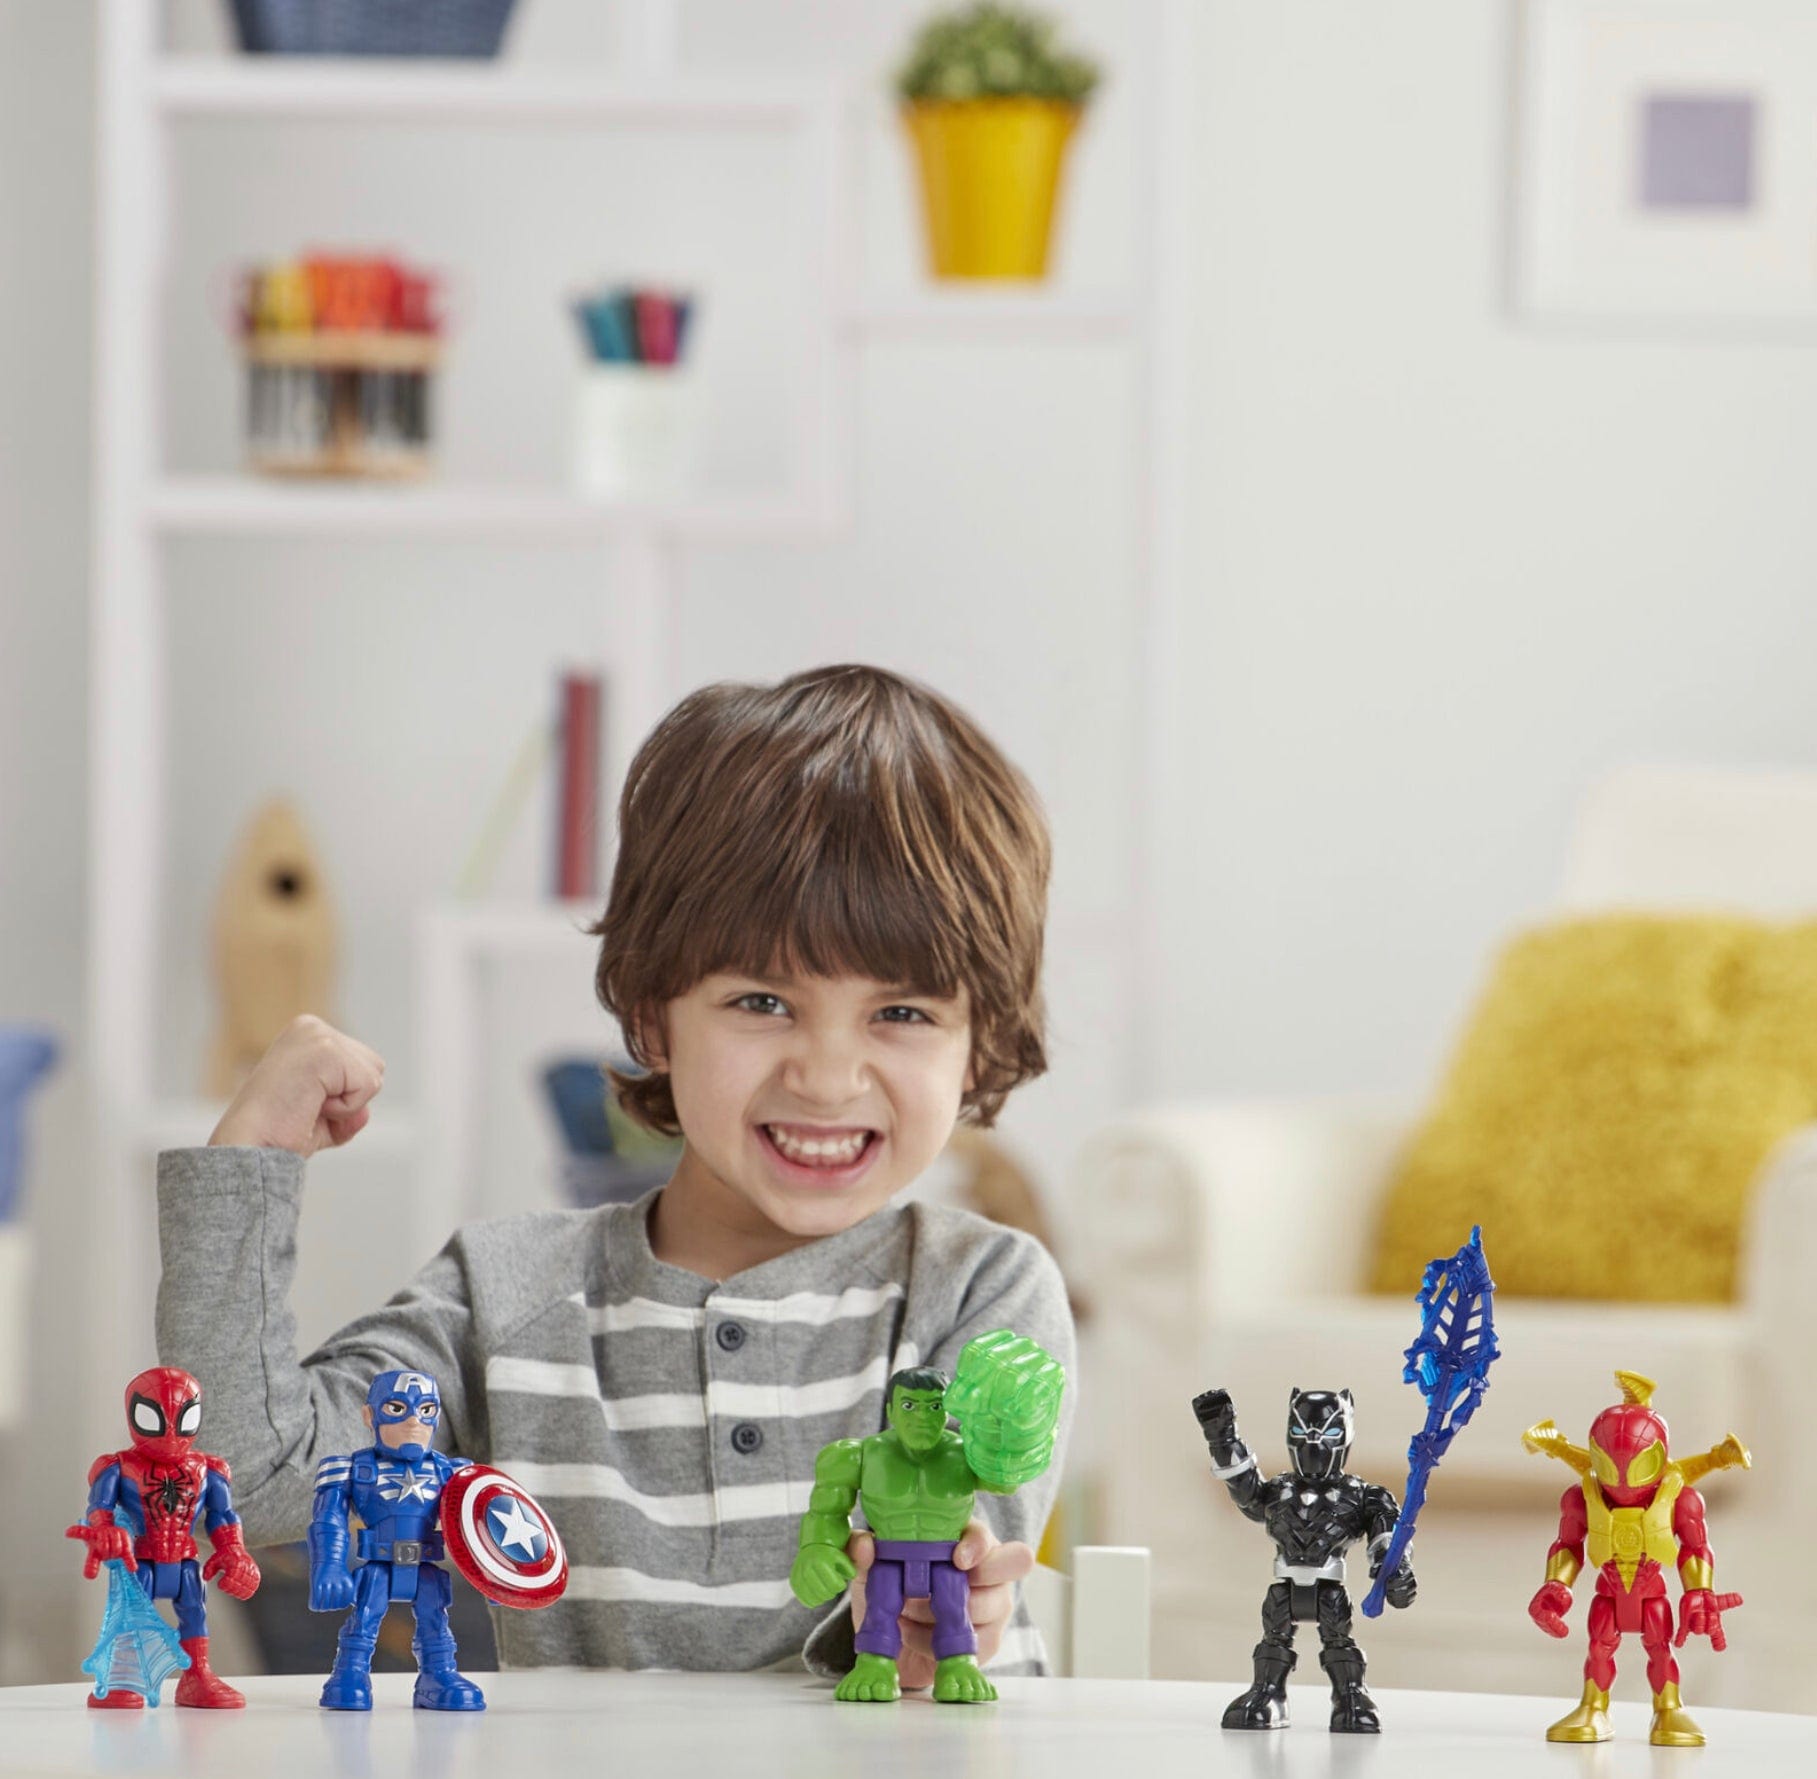 Marvel Super Hero Adventures toys, 12cm Spider-Man Action Figure & Web Accessory